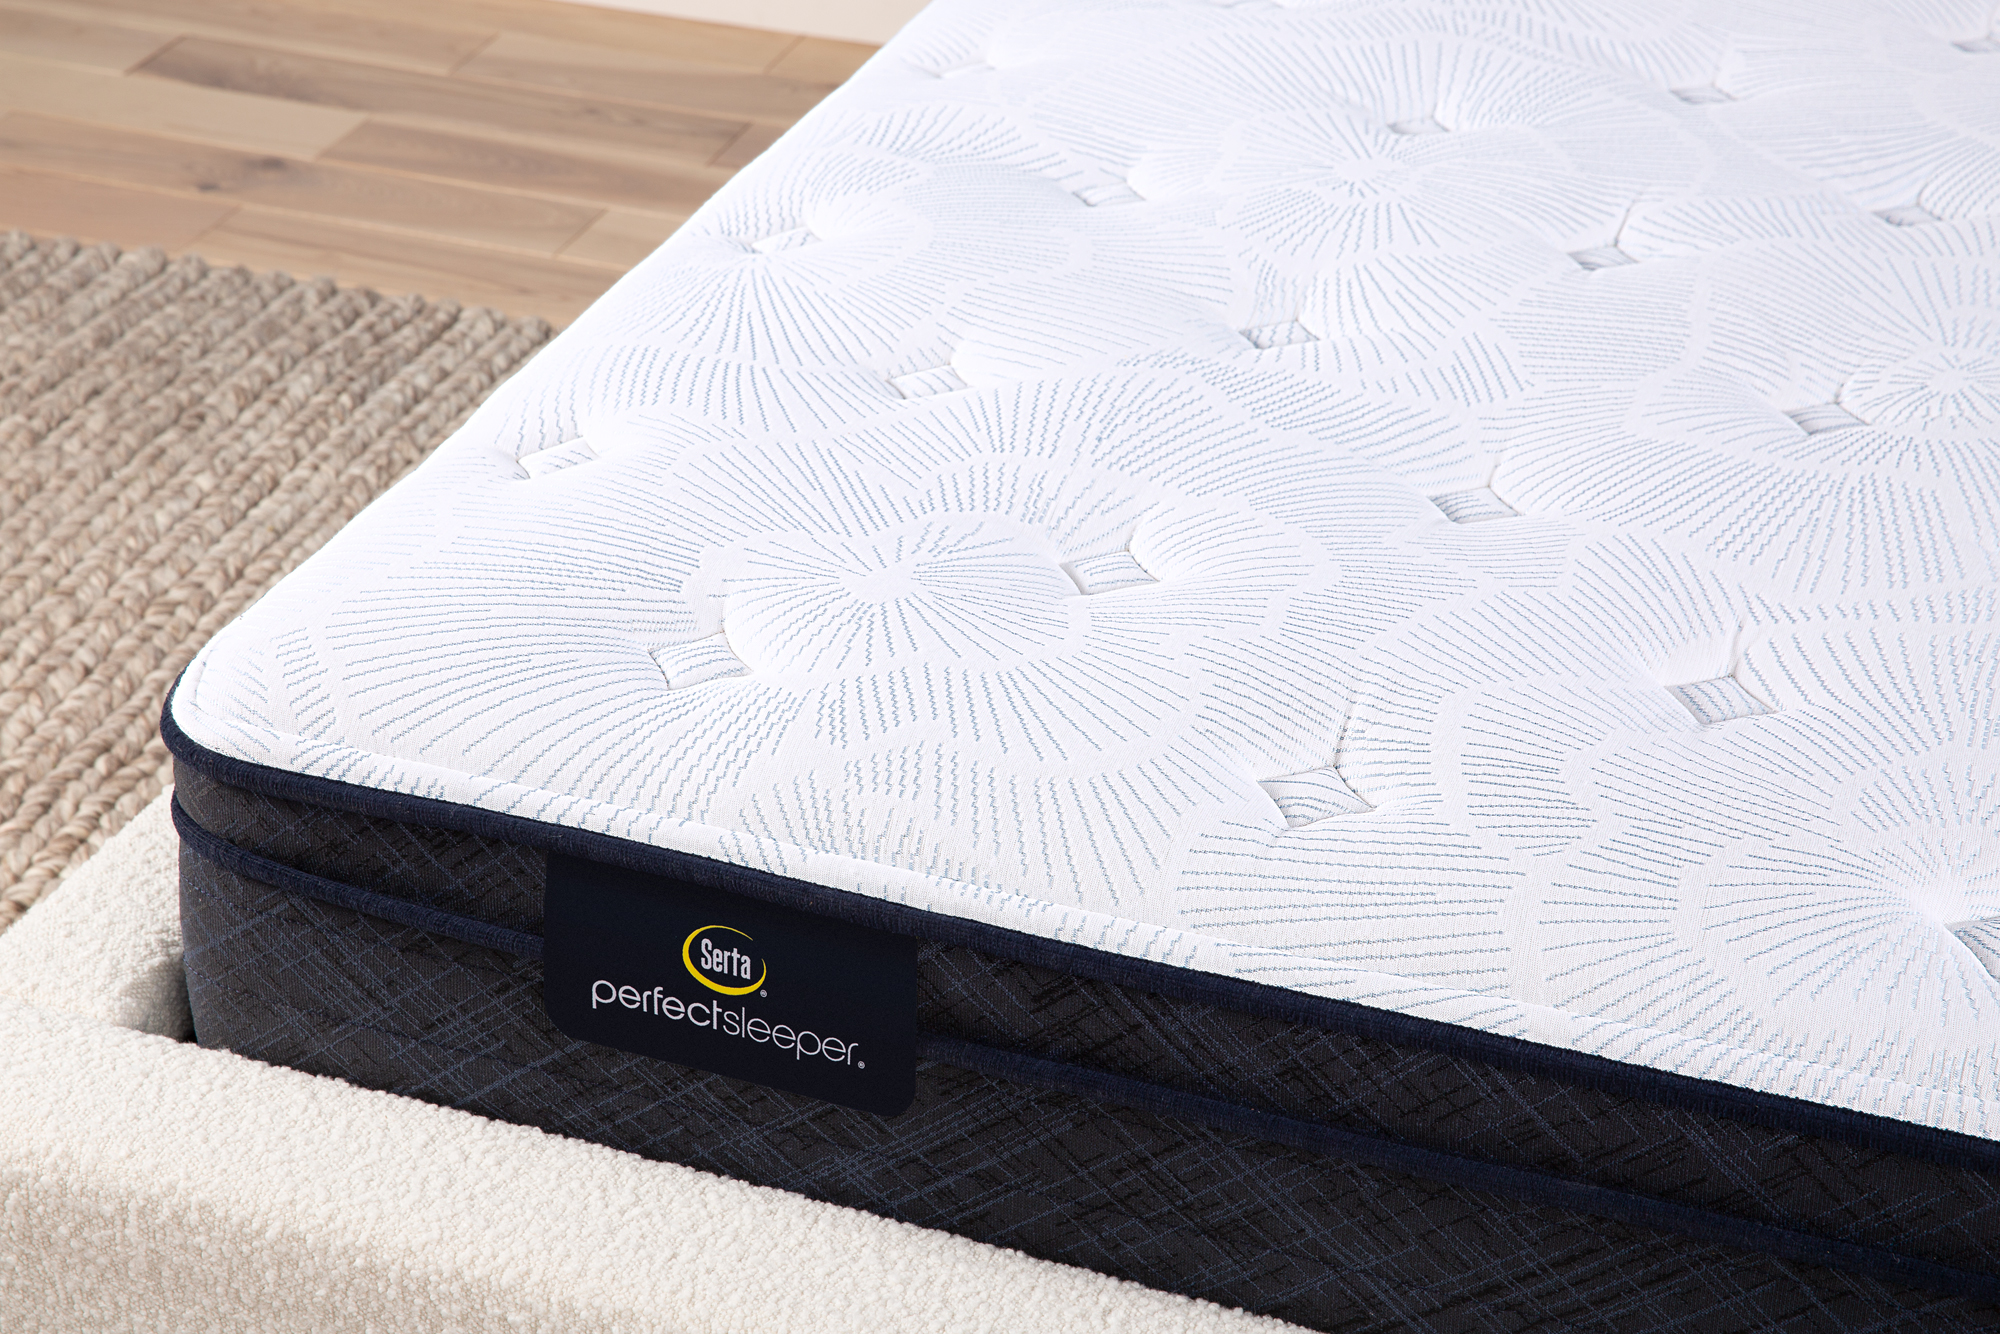 Photo of the Serta Perfect Sleeper Adoring Night Plush Eurotop mattress.